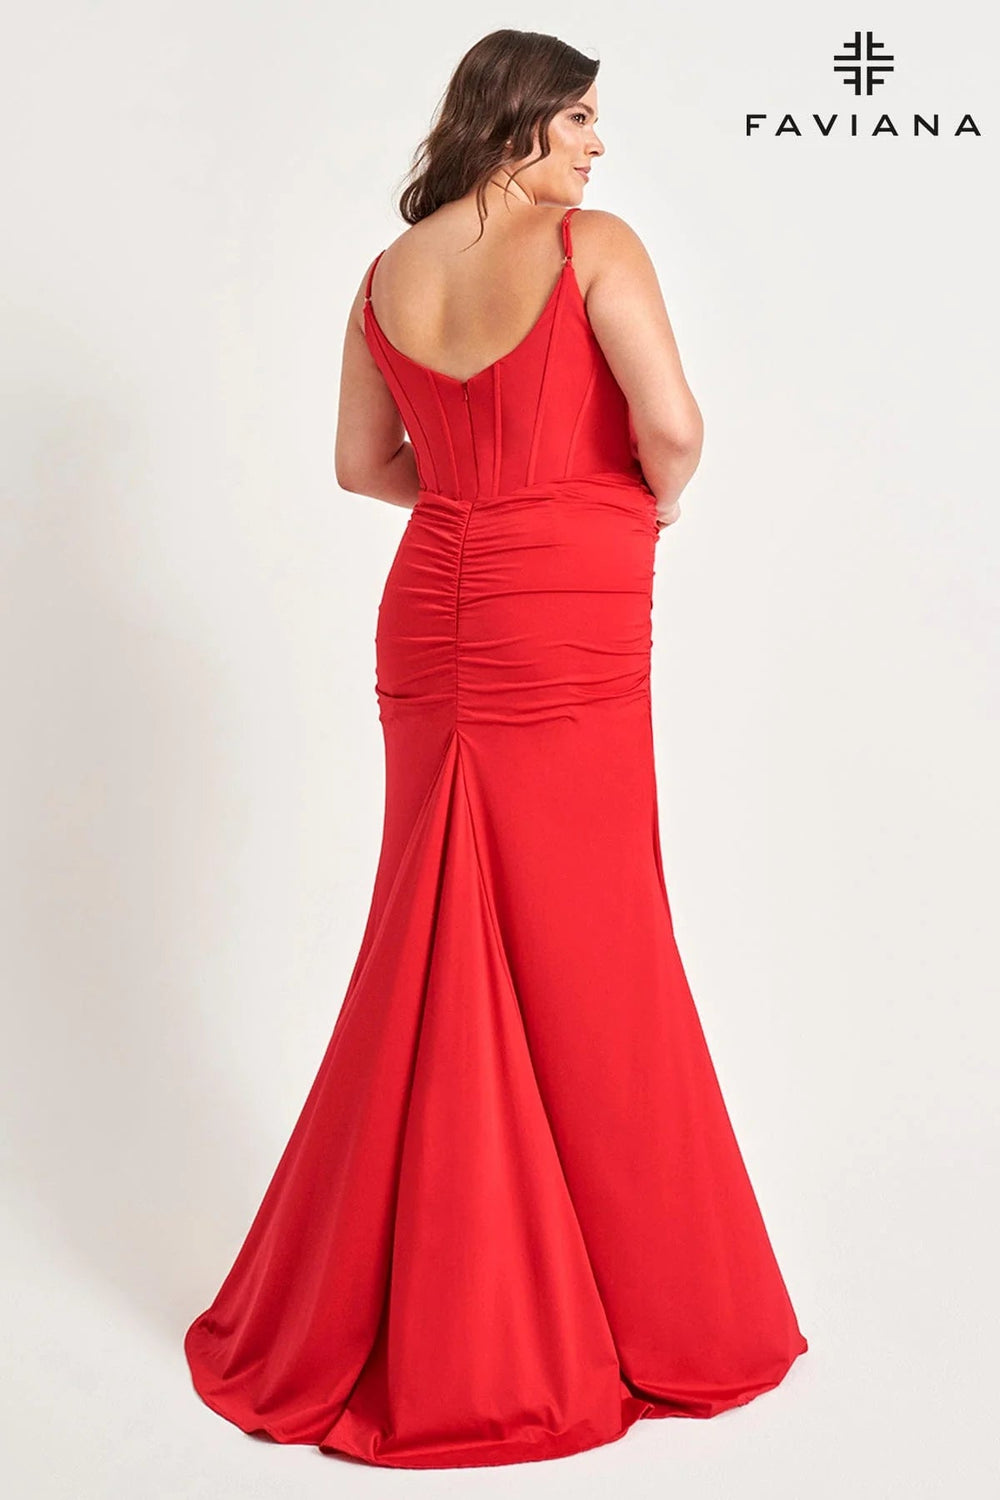 Faviana Evening Gown Plus Size FAVIANA 9544 Dress